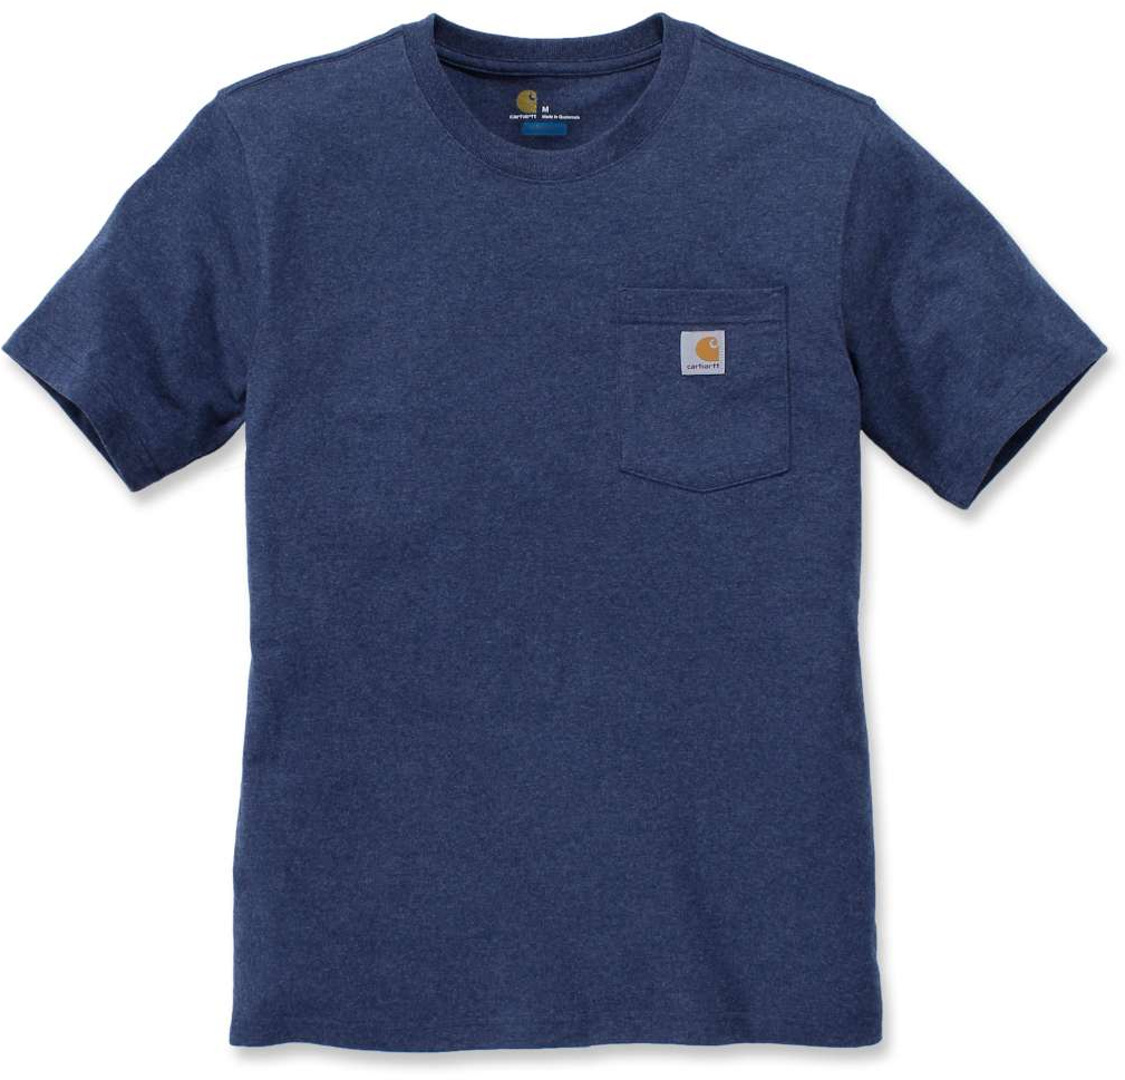 Футболка Carhartt Workwear Pocket, синий футболка женская carhartt workwear pocket синий